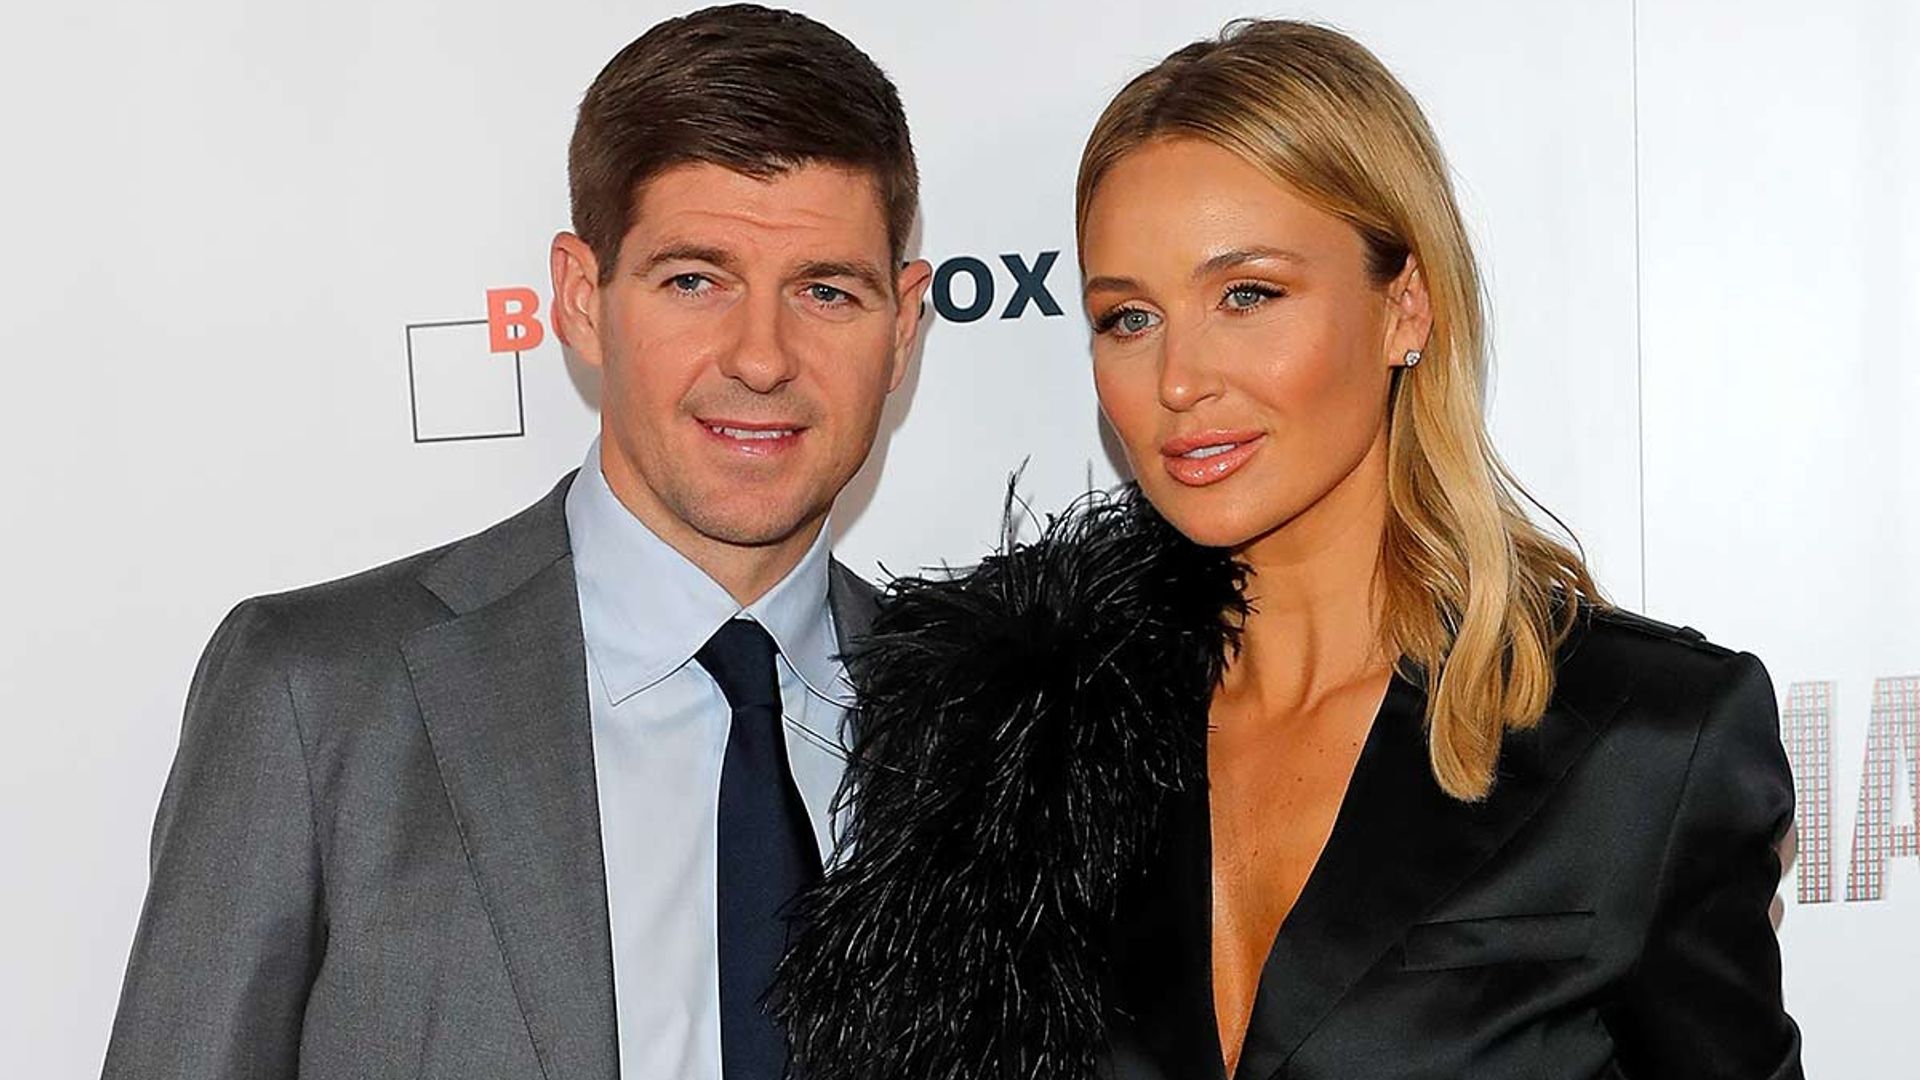 Steven Gerrard reveals the surprising place wife Alex keeps her wedding dress in anniversary post